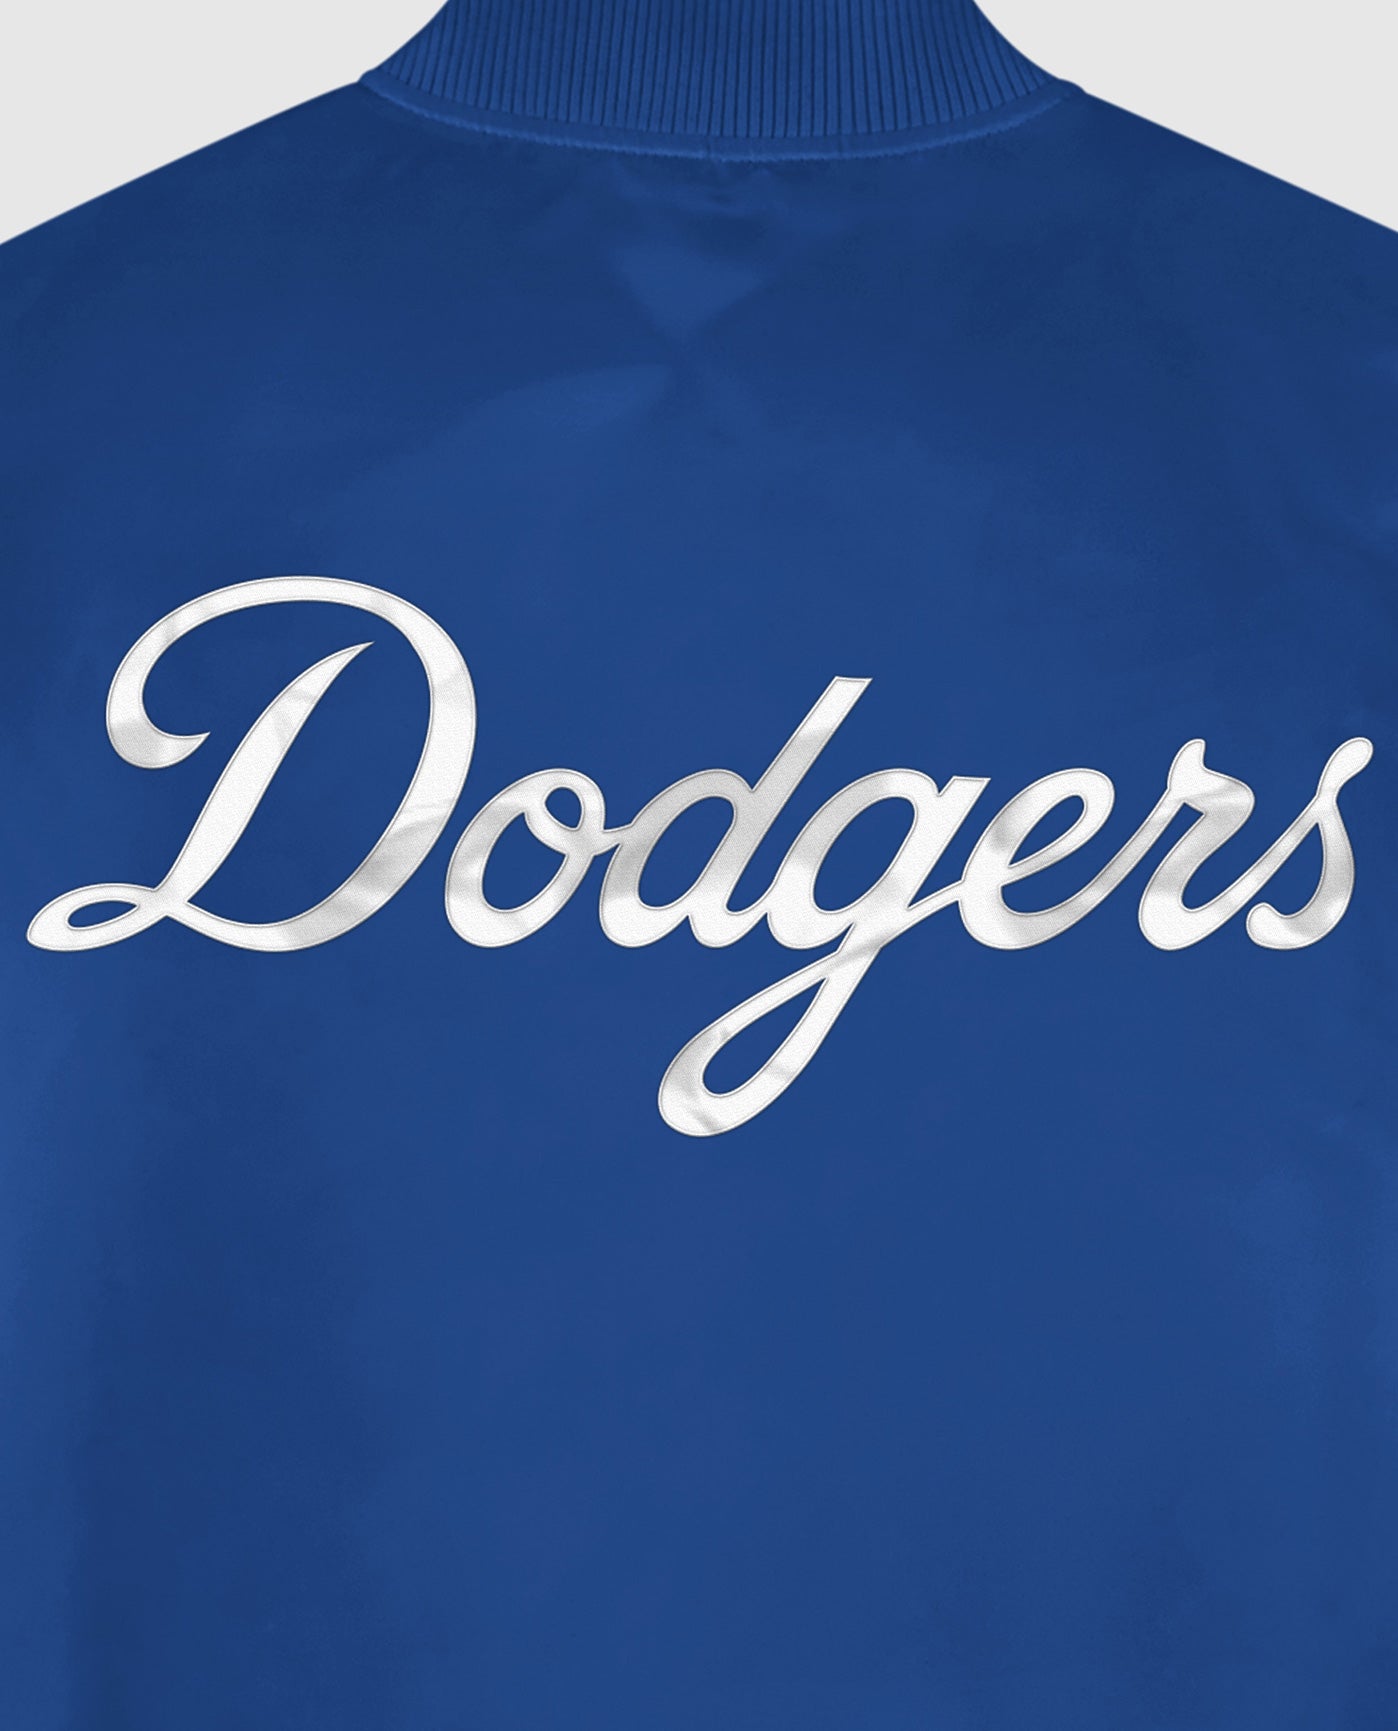 LA Dodgers M&N Lightweight Satin Jacket Wordmark Blue - The Locker